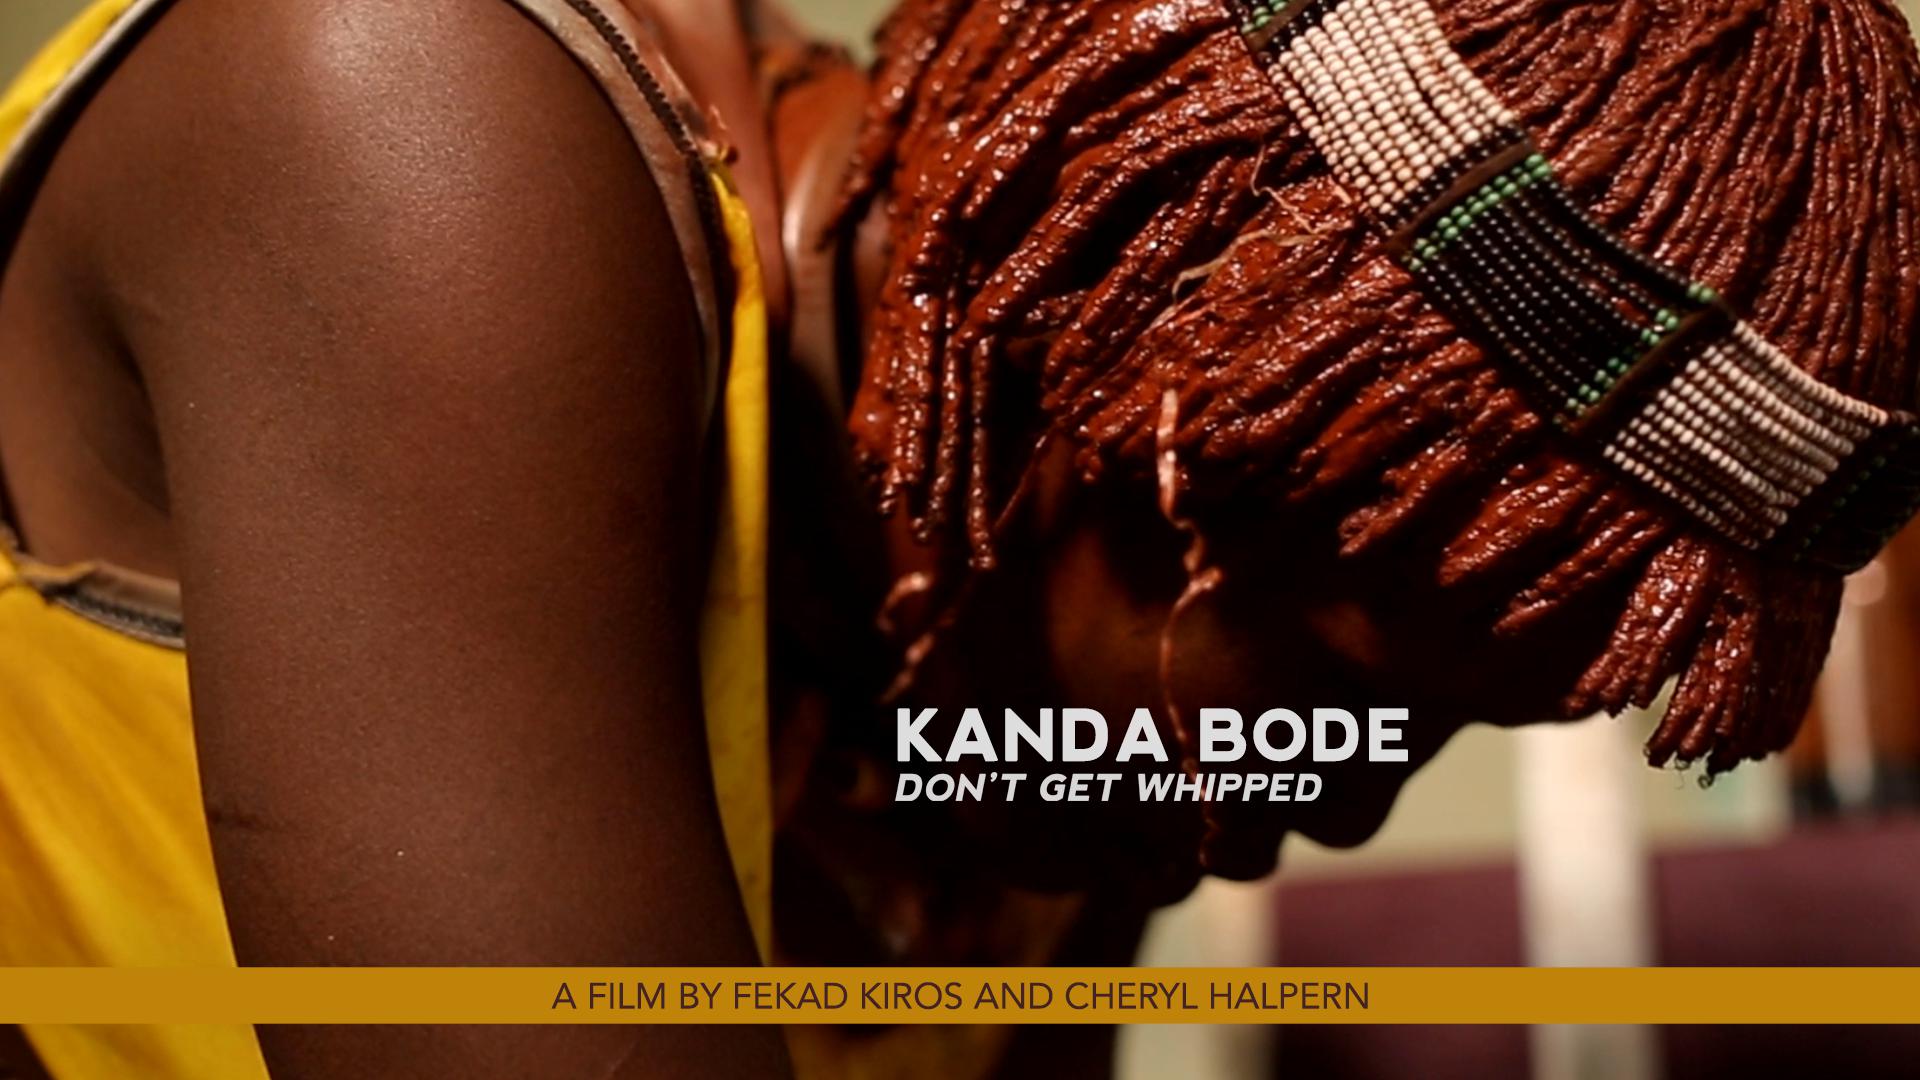 Kanda Bode (Don't Get Whipped)